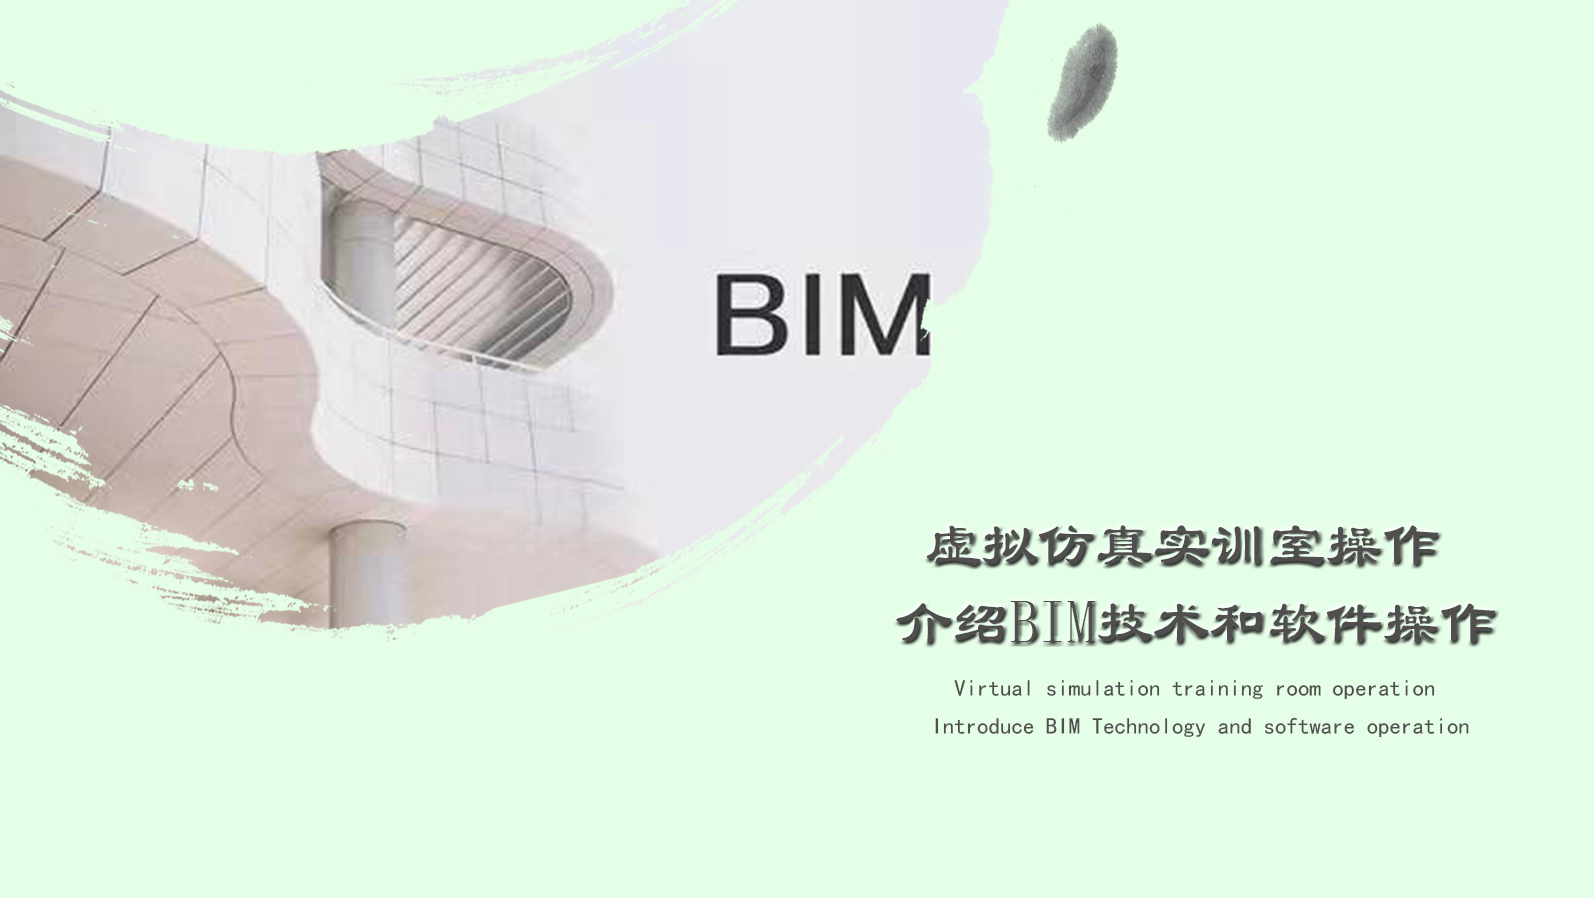 Introduce BIM Technology and Software Operation